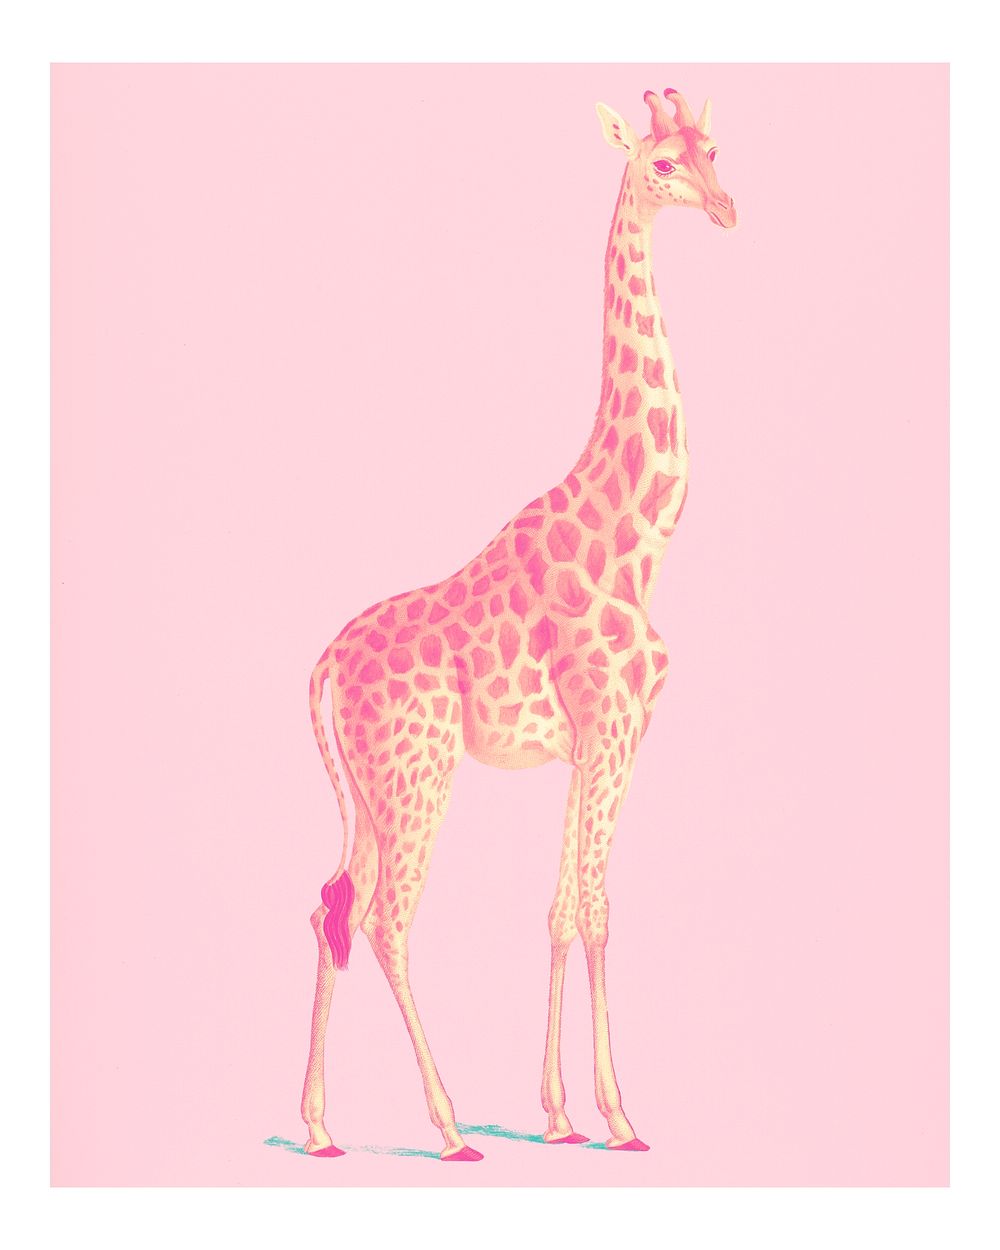 Vintage giraffe (Giraffa camelopardalis) illustration wall art print and poster.